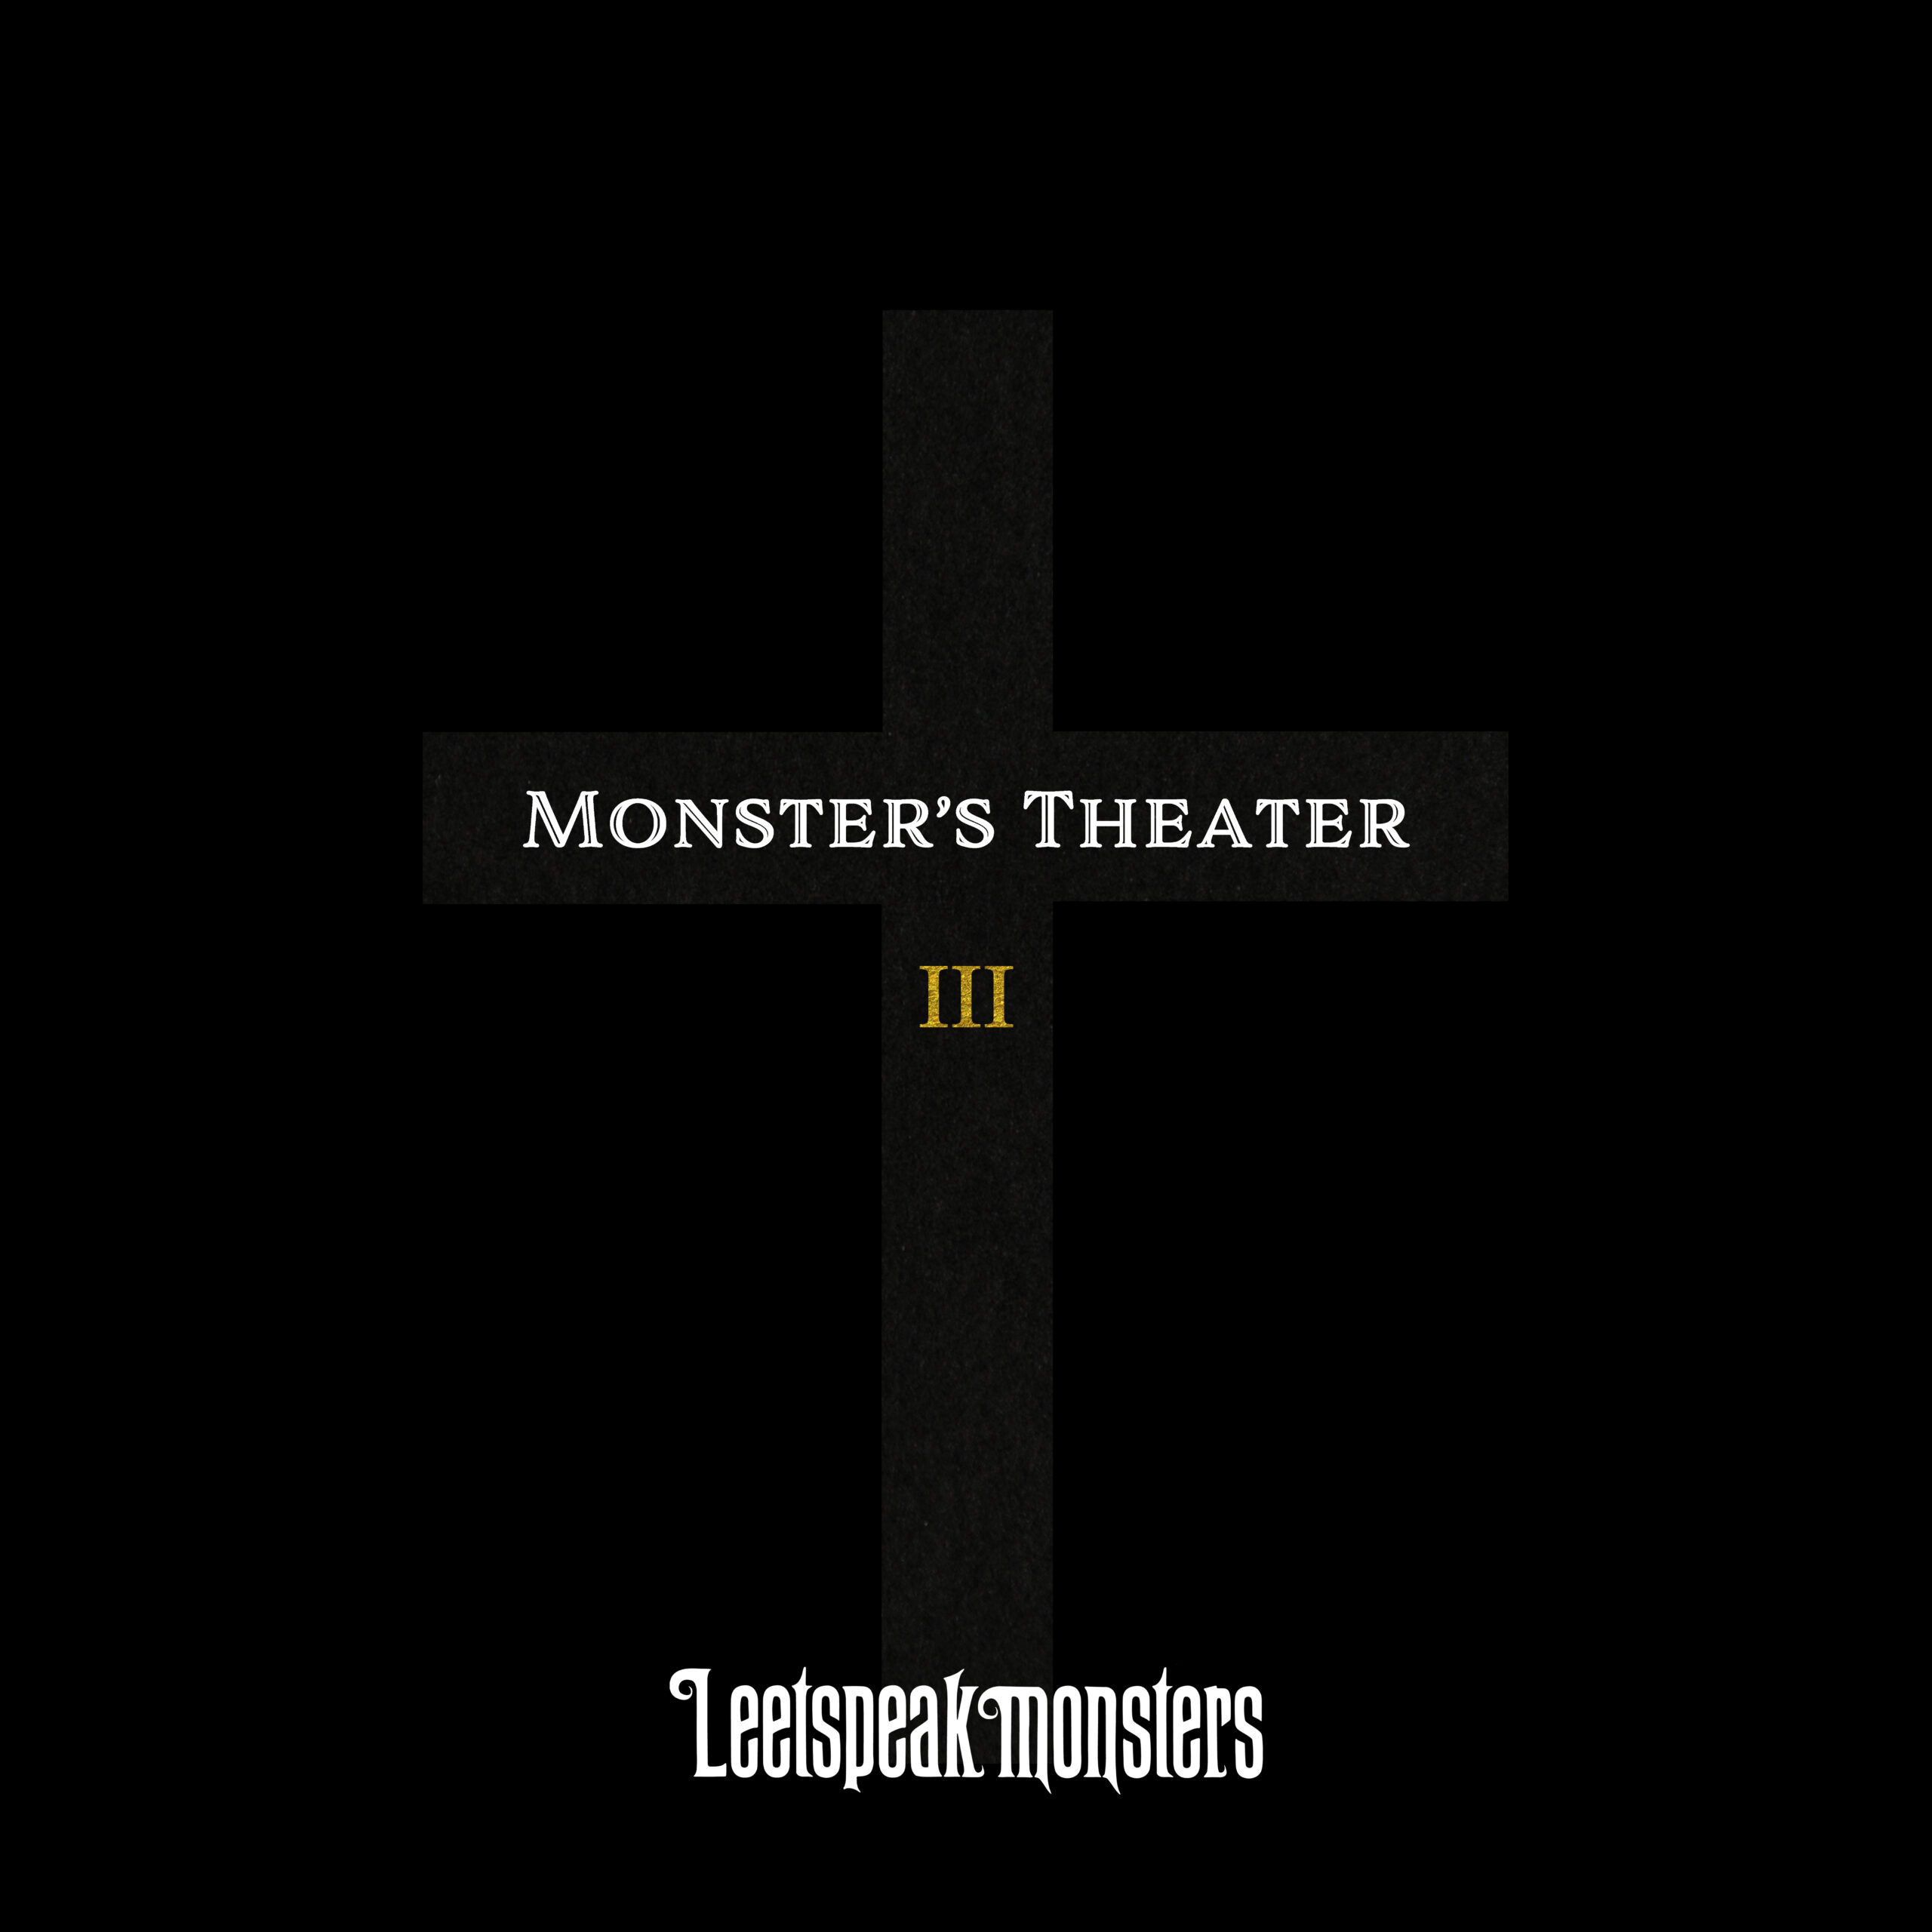 Leetspeak monstersオフィシャルホームページ